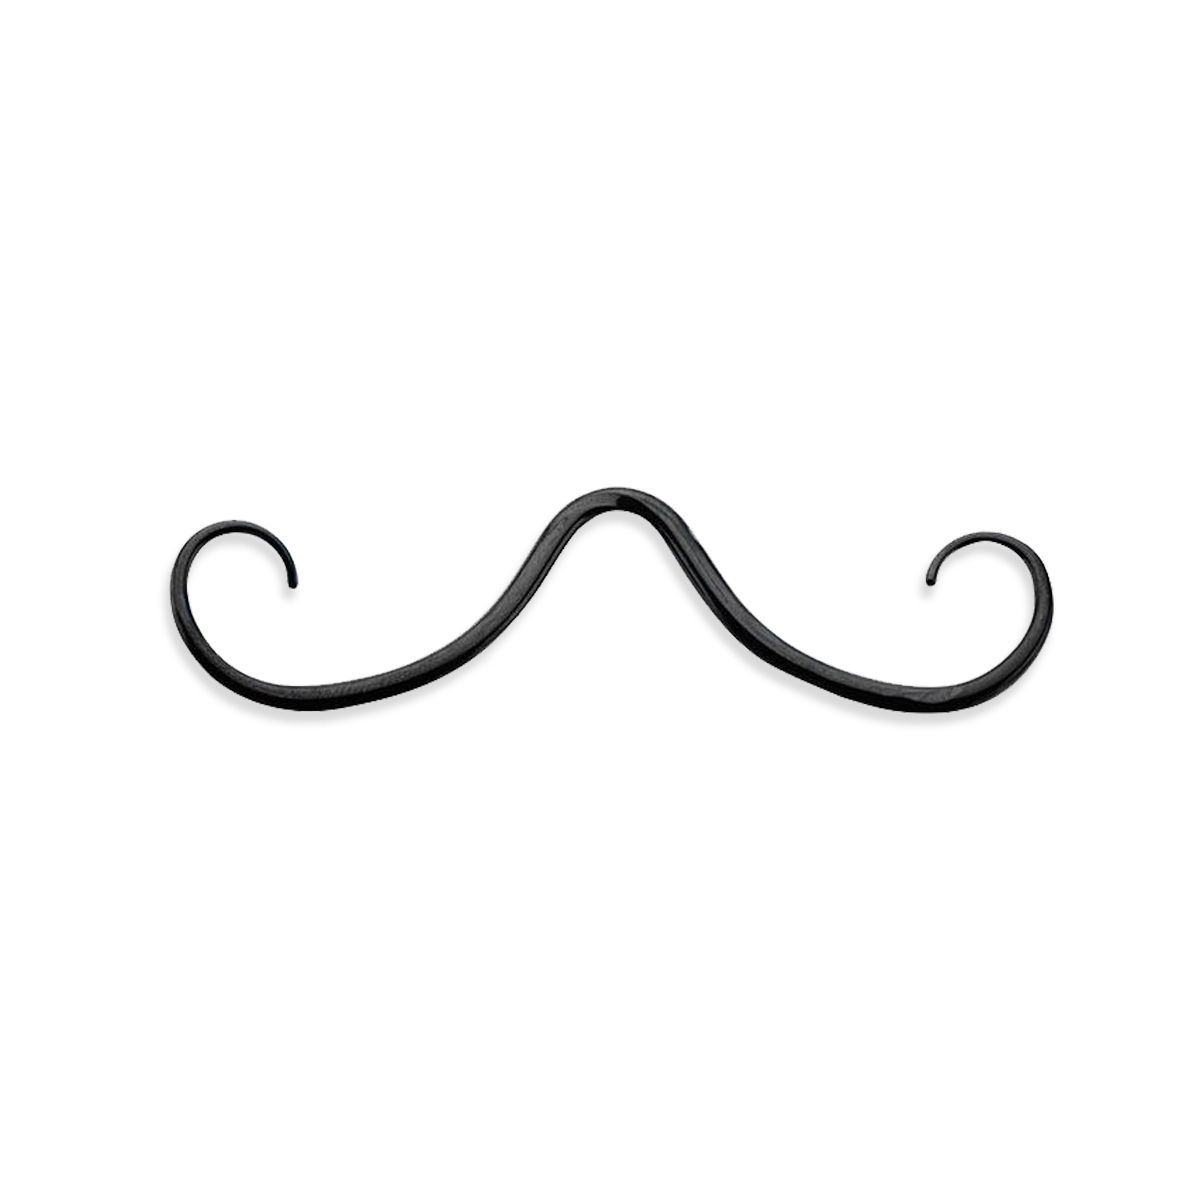 Black Septum Moustache Nose Ring [Curly Design], 16G-1.2mm Size, 316L Surgical Steel, 2¾” Length, Hy